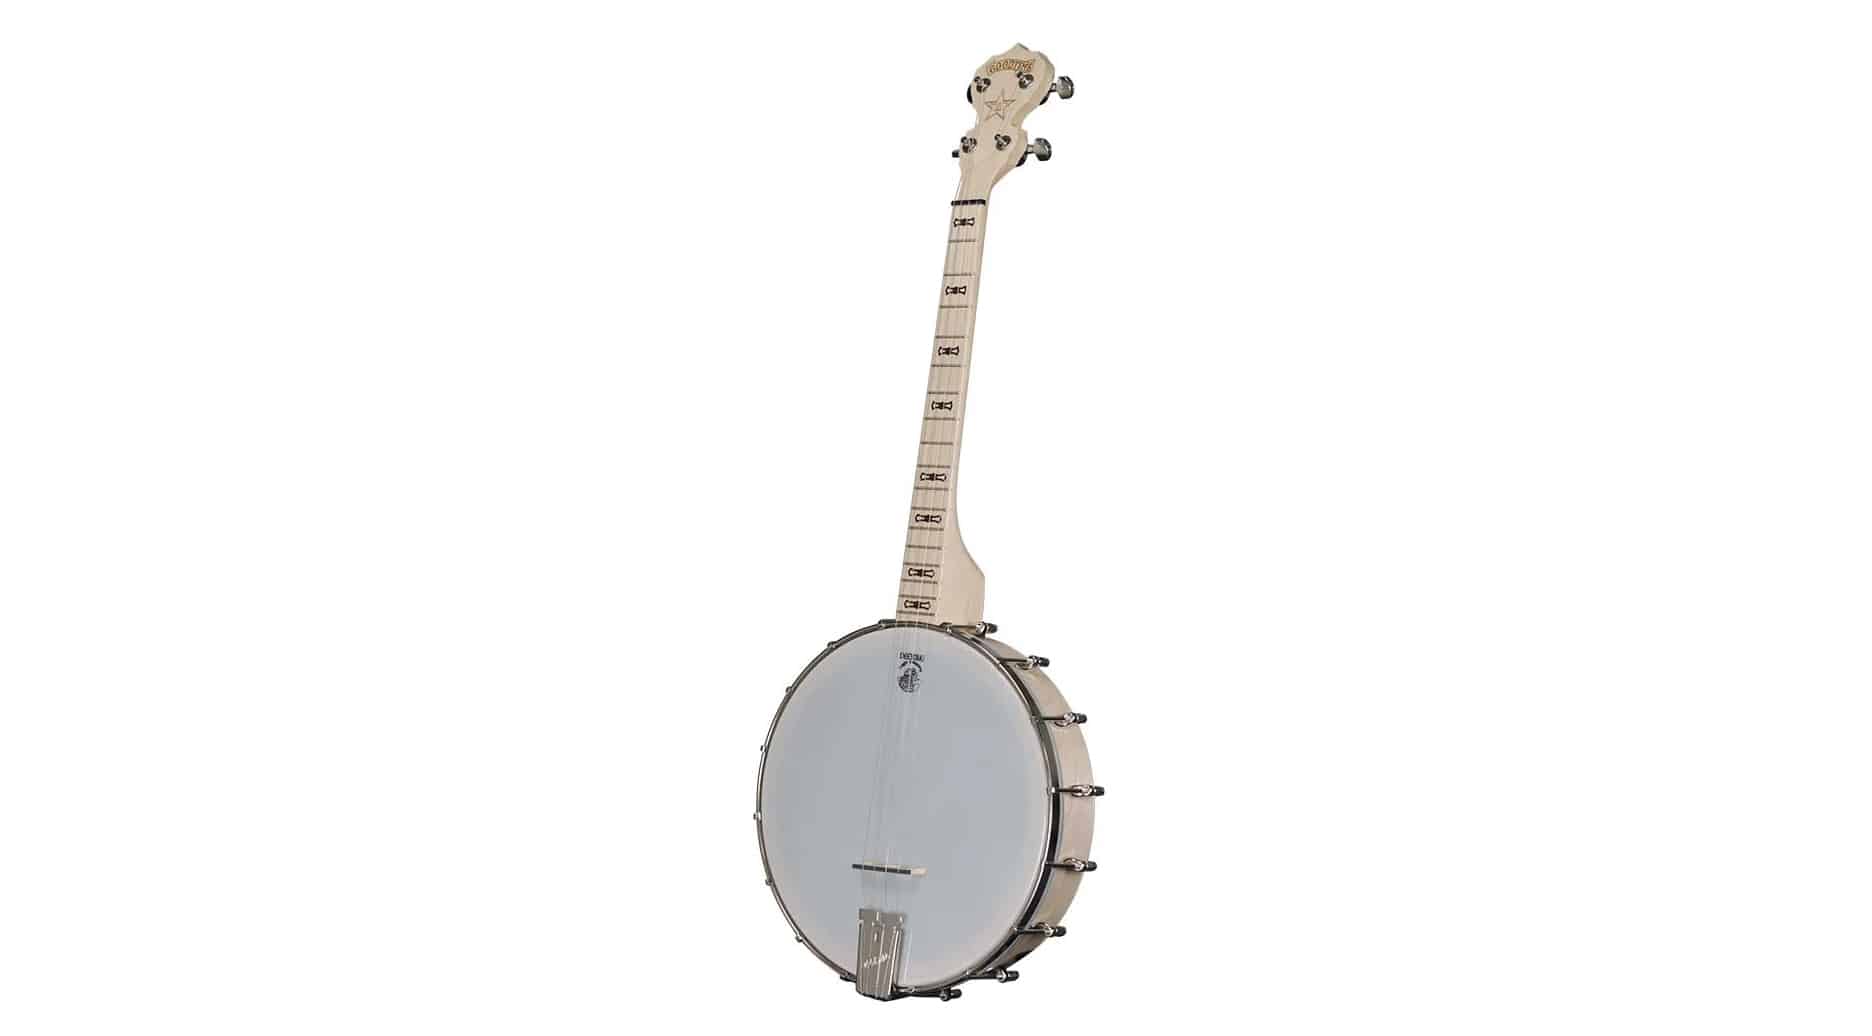 deering goodtime banjo